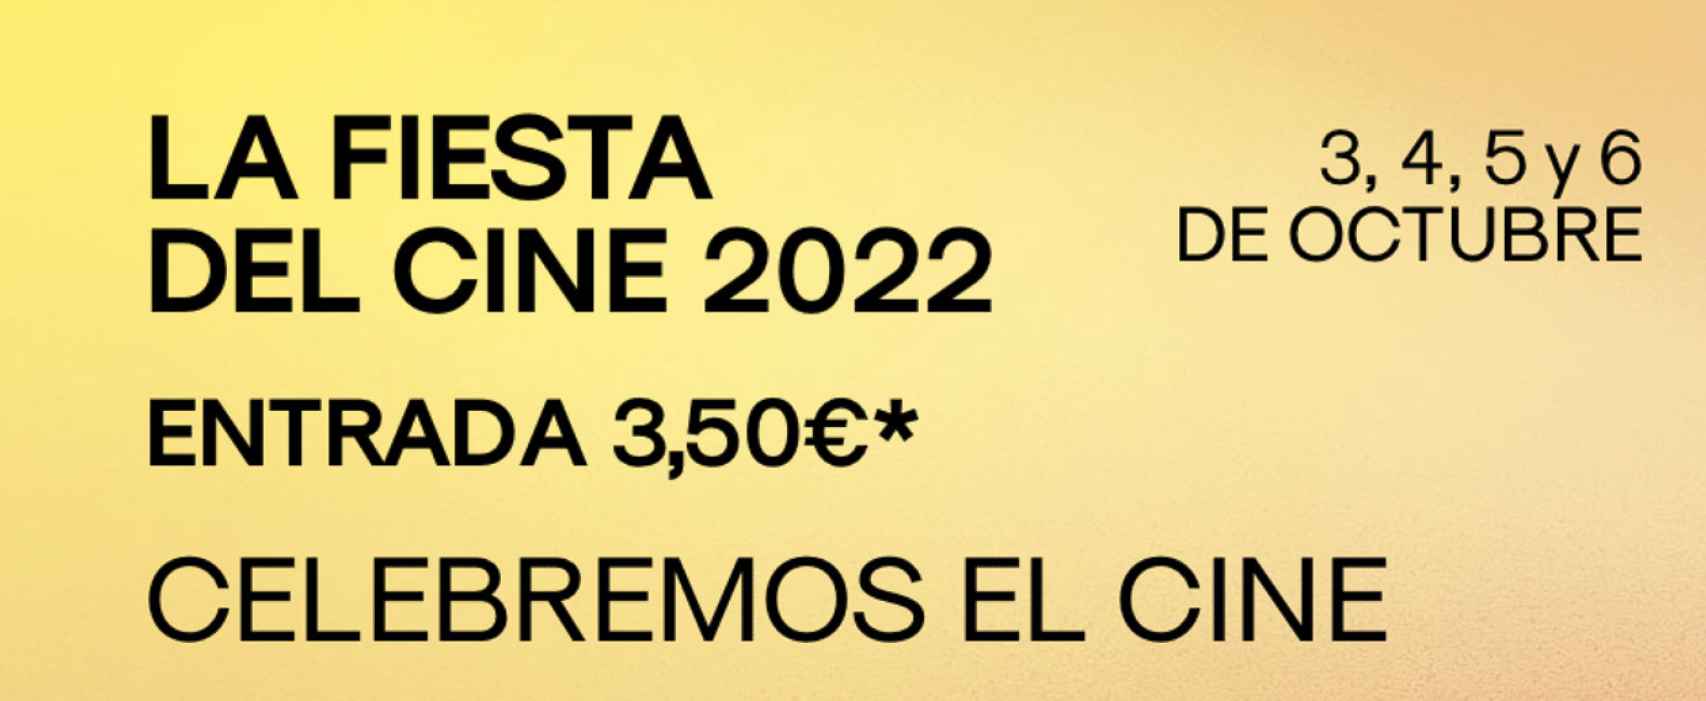 Fiesta del cine 2022